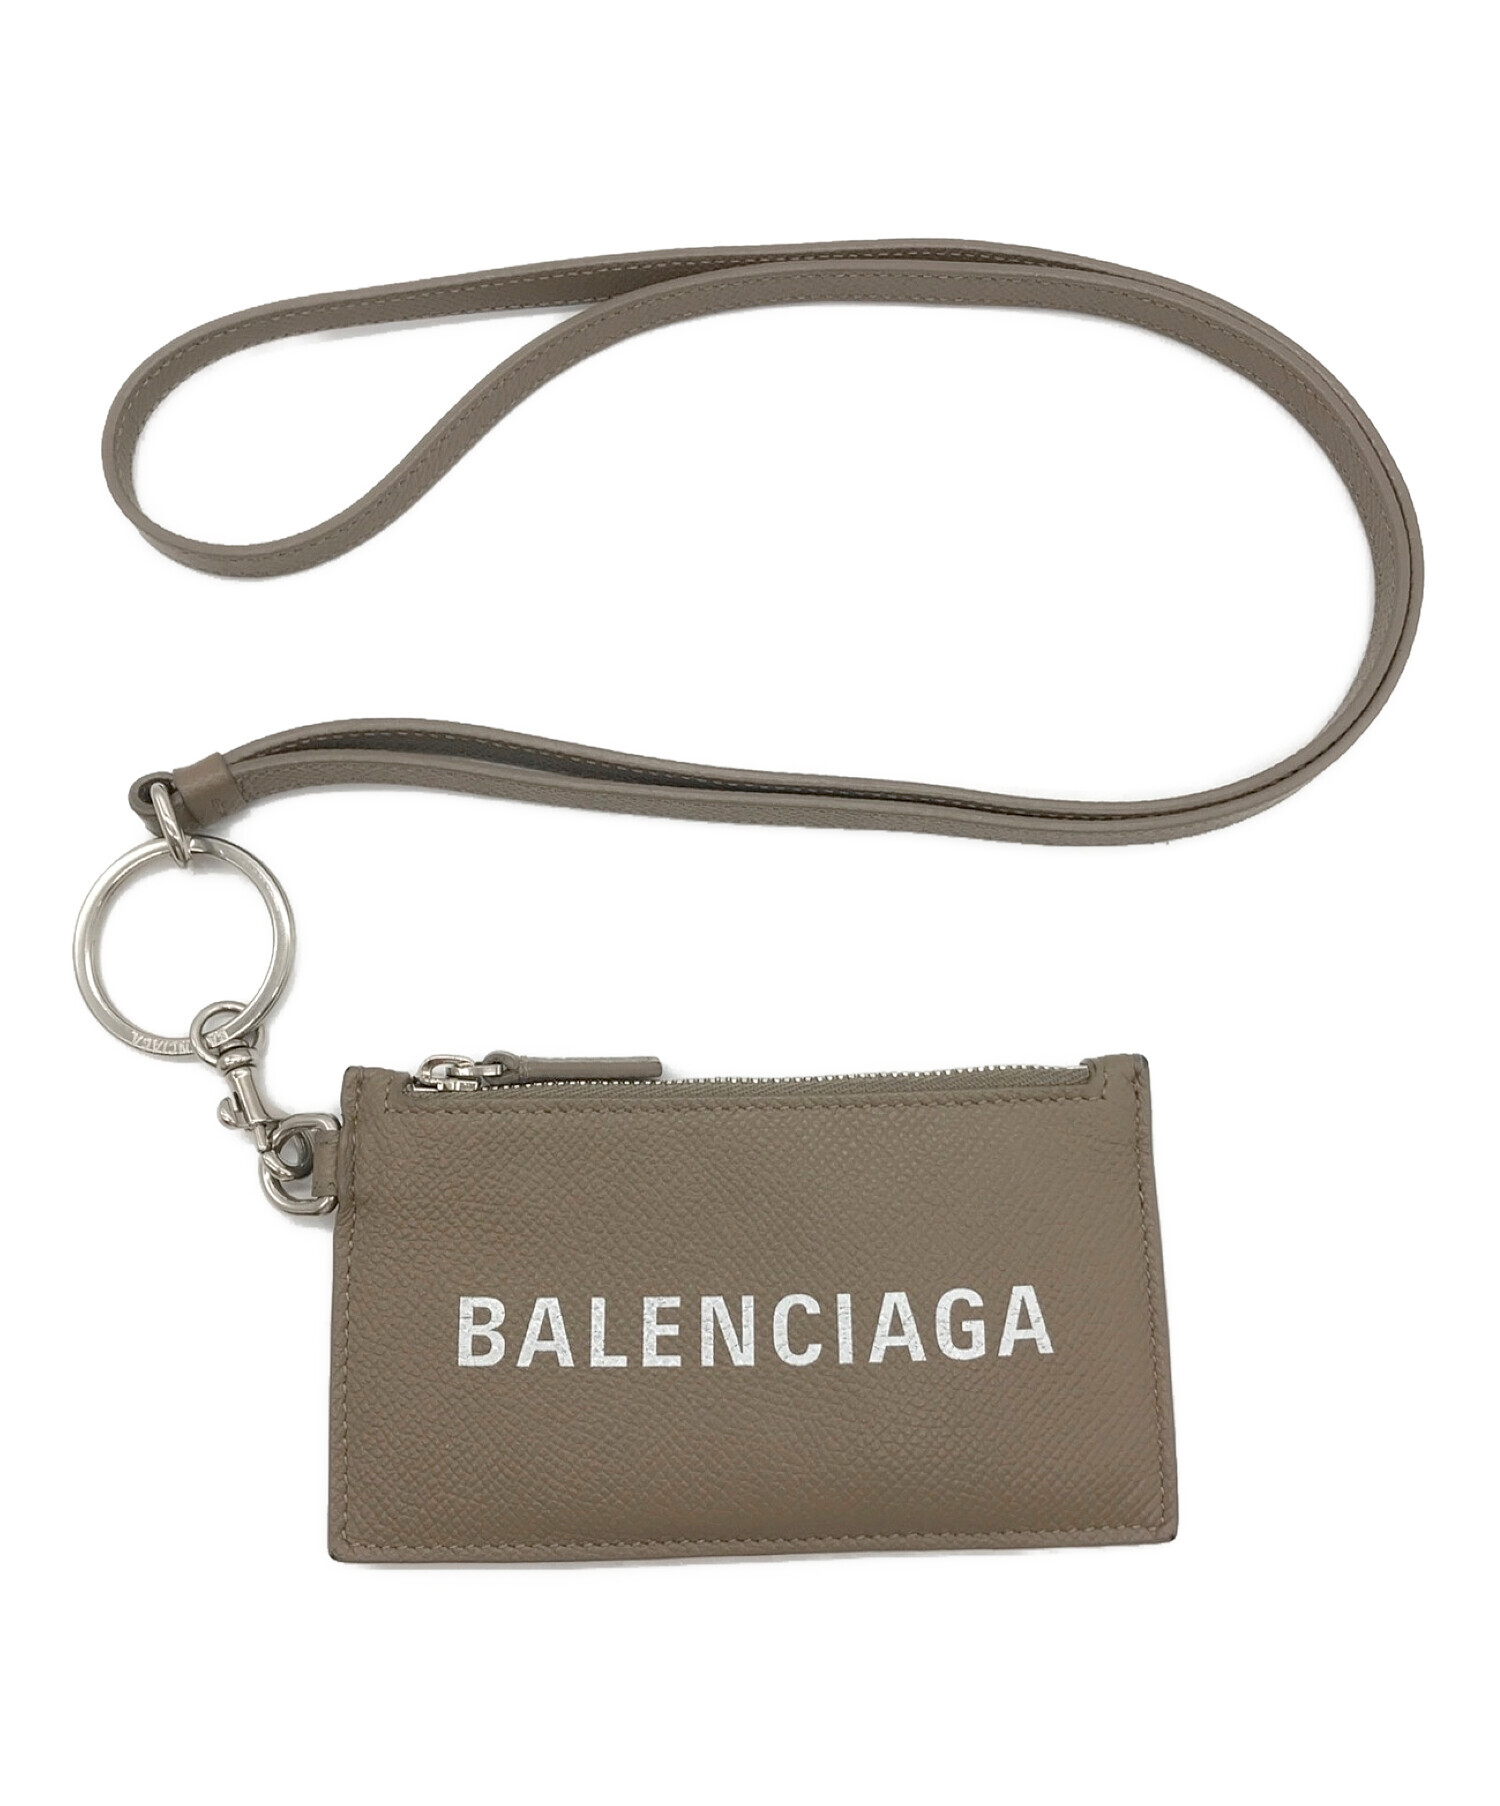 BALENCIAGA (バレンシアガ) ネックストラップ付 カードケース カーキ サイズ:-